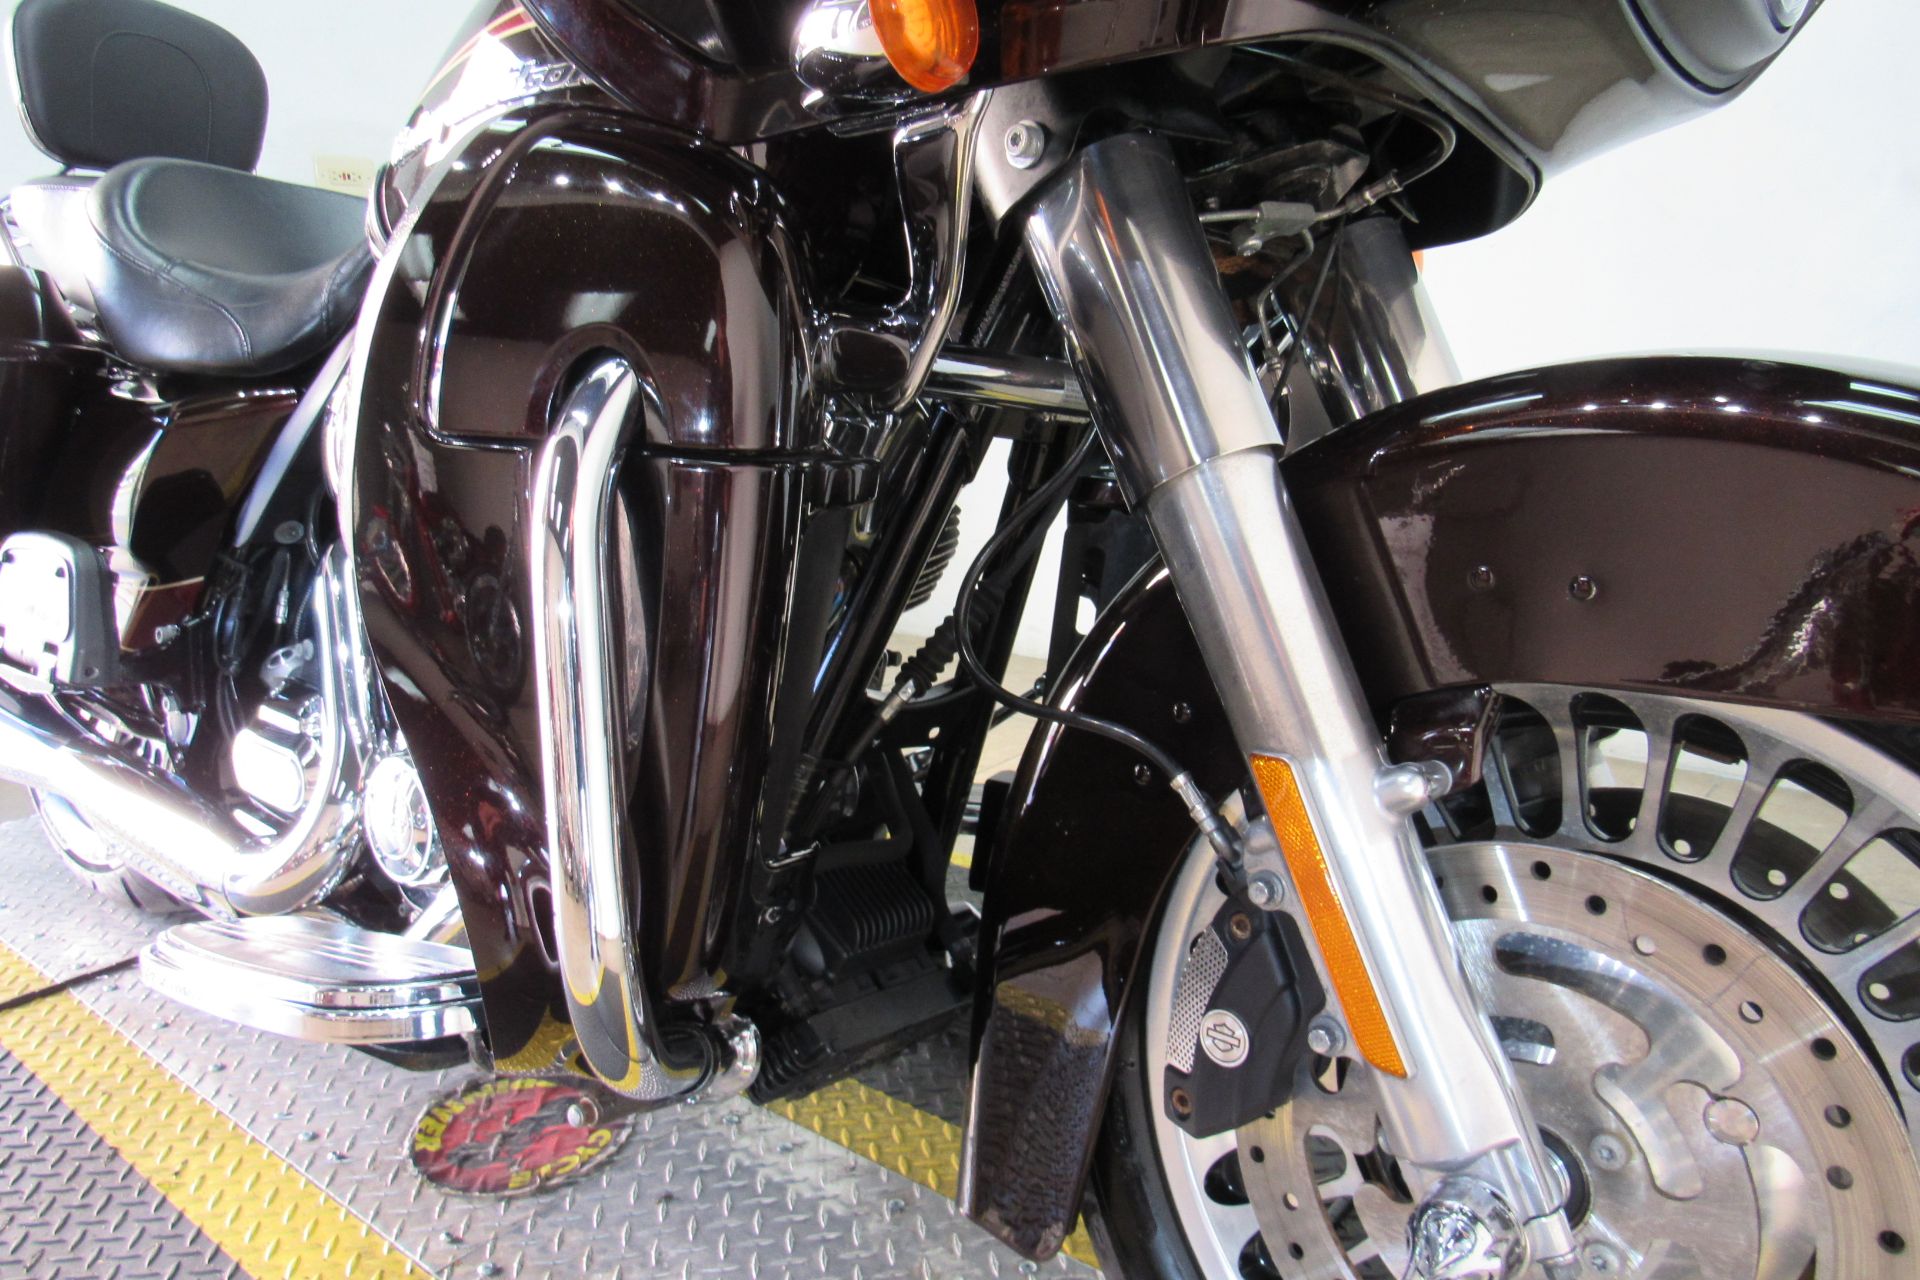 2011 Harley-Davidson Road Glide® Ultra in Temecula, California - Photo 17